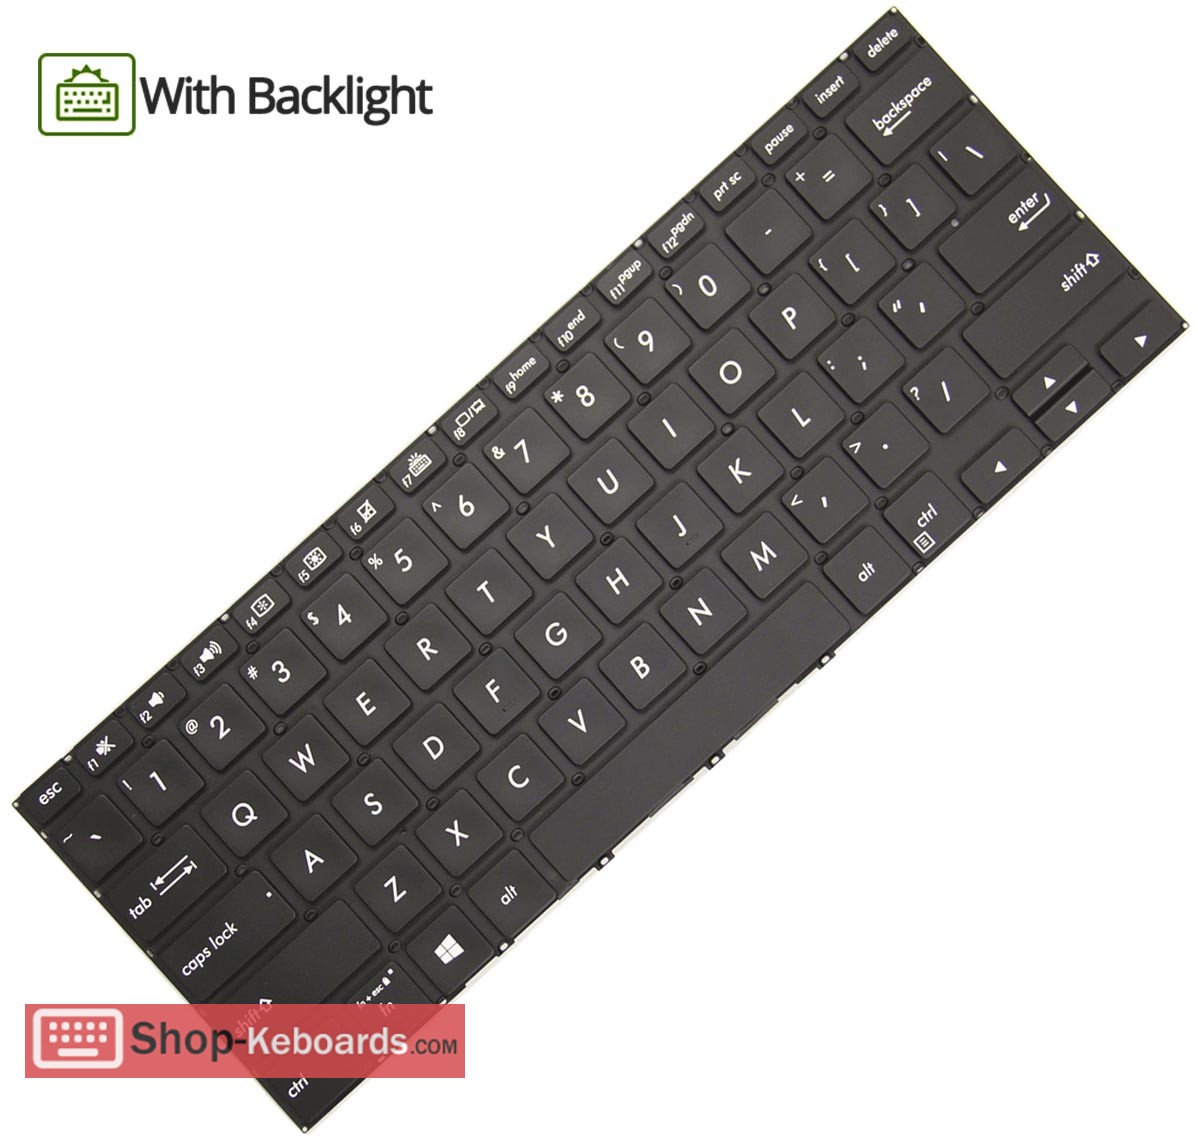 Asus 0KNB0-1626LA00 Keyboard replacement